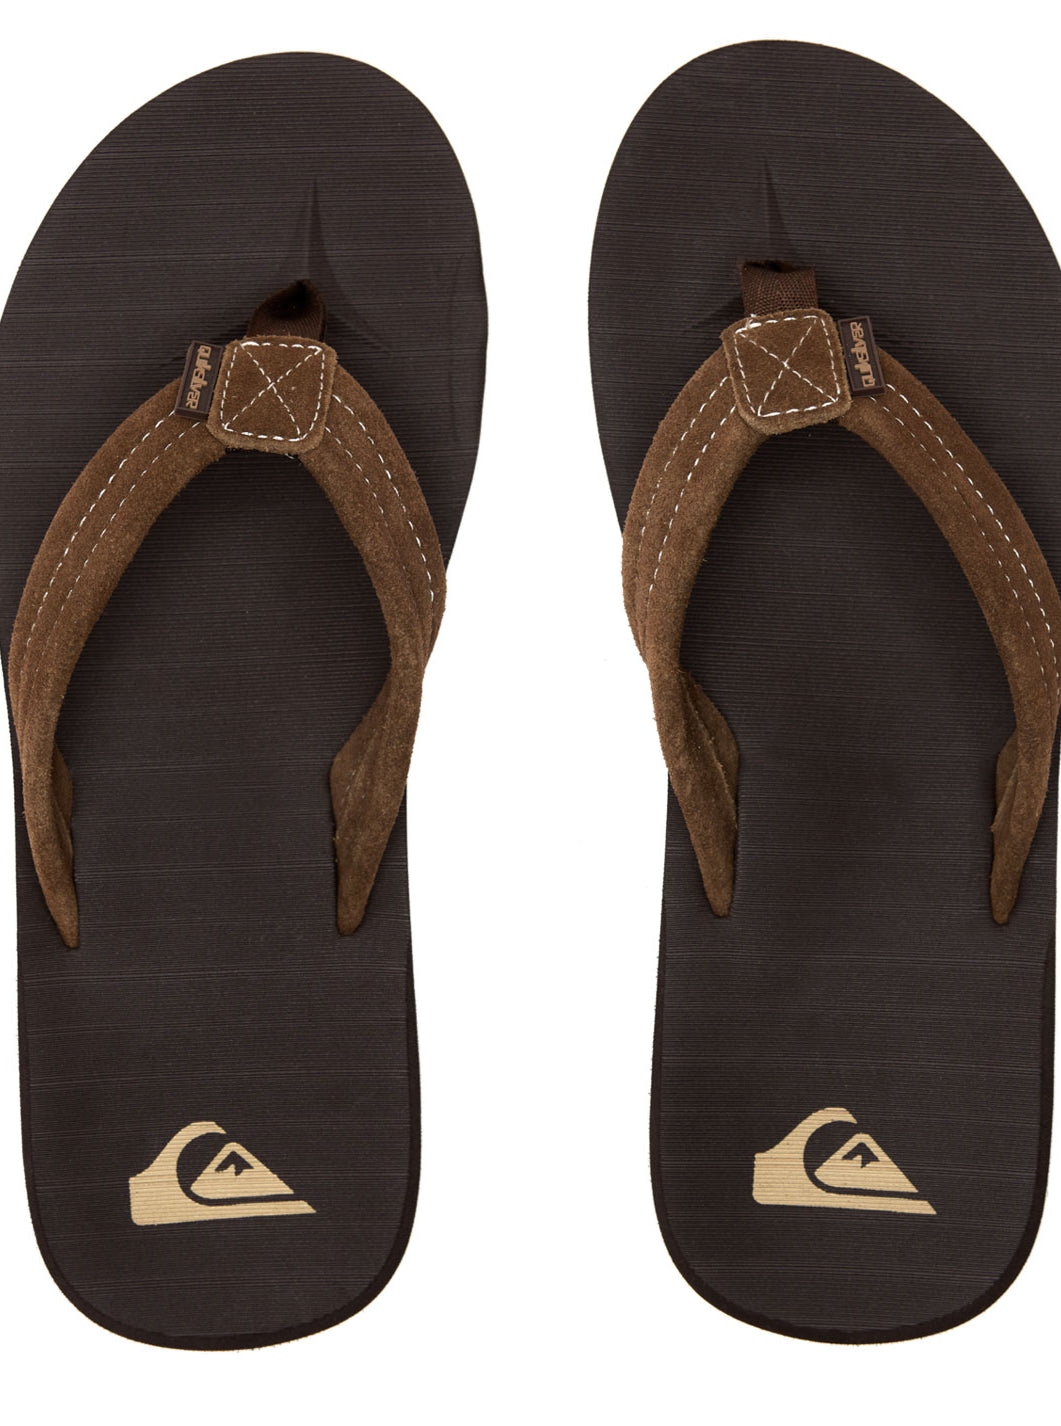 Quksilver: Carver Suede Leather Sandals